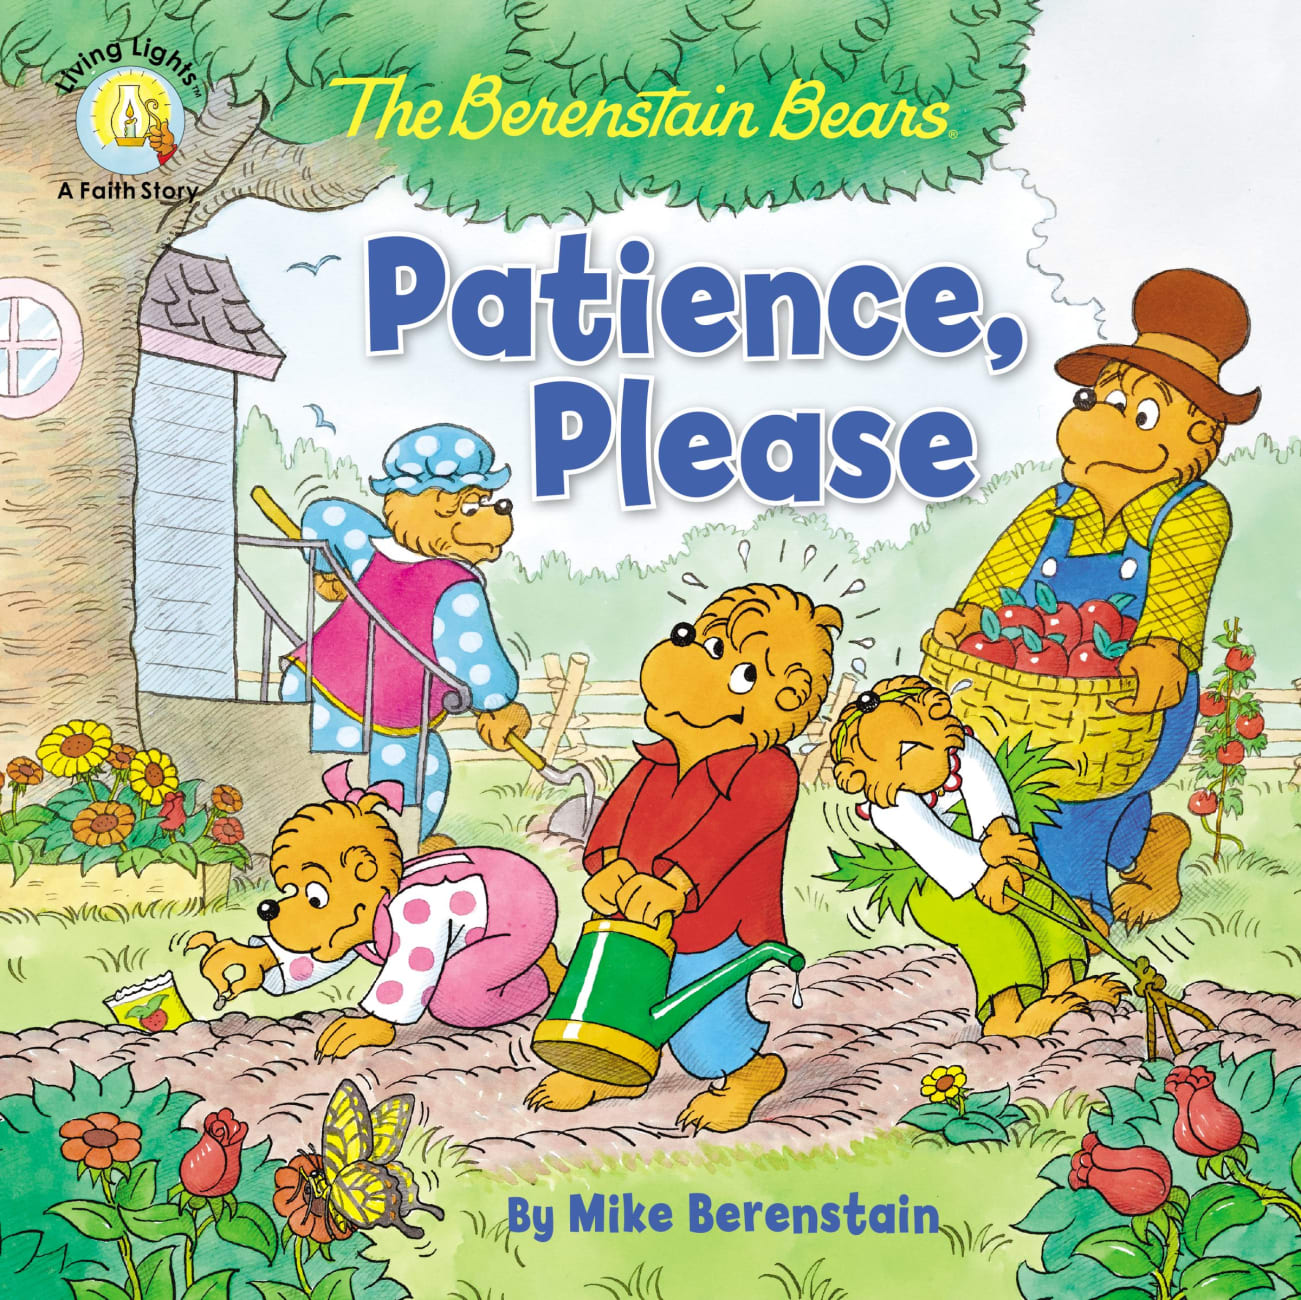 The Berenstain Bears Patience, Please (The Berenstain Bears Series) Paperback